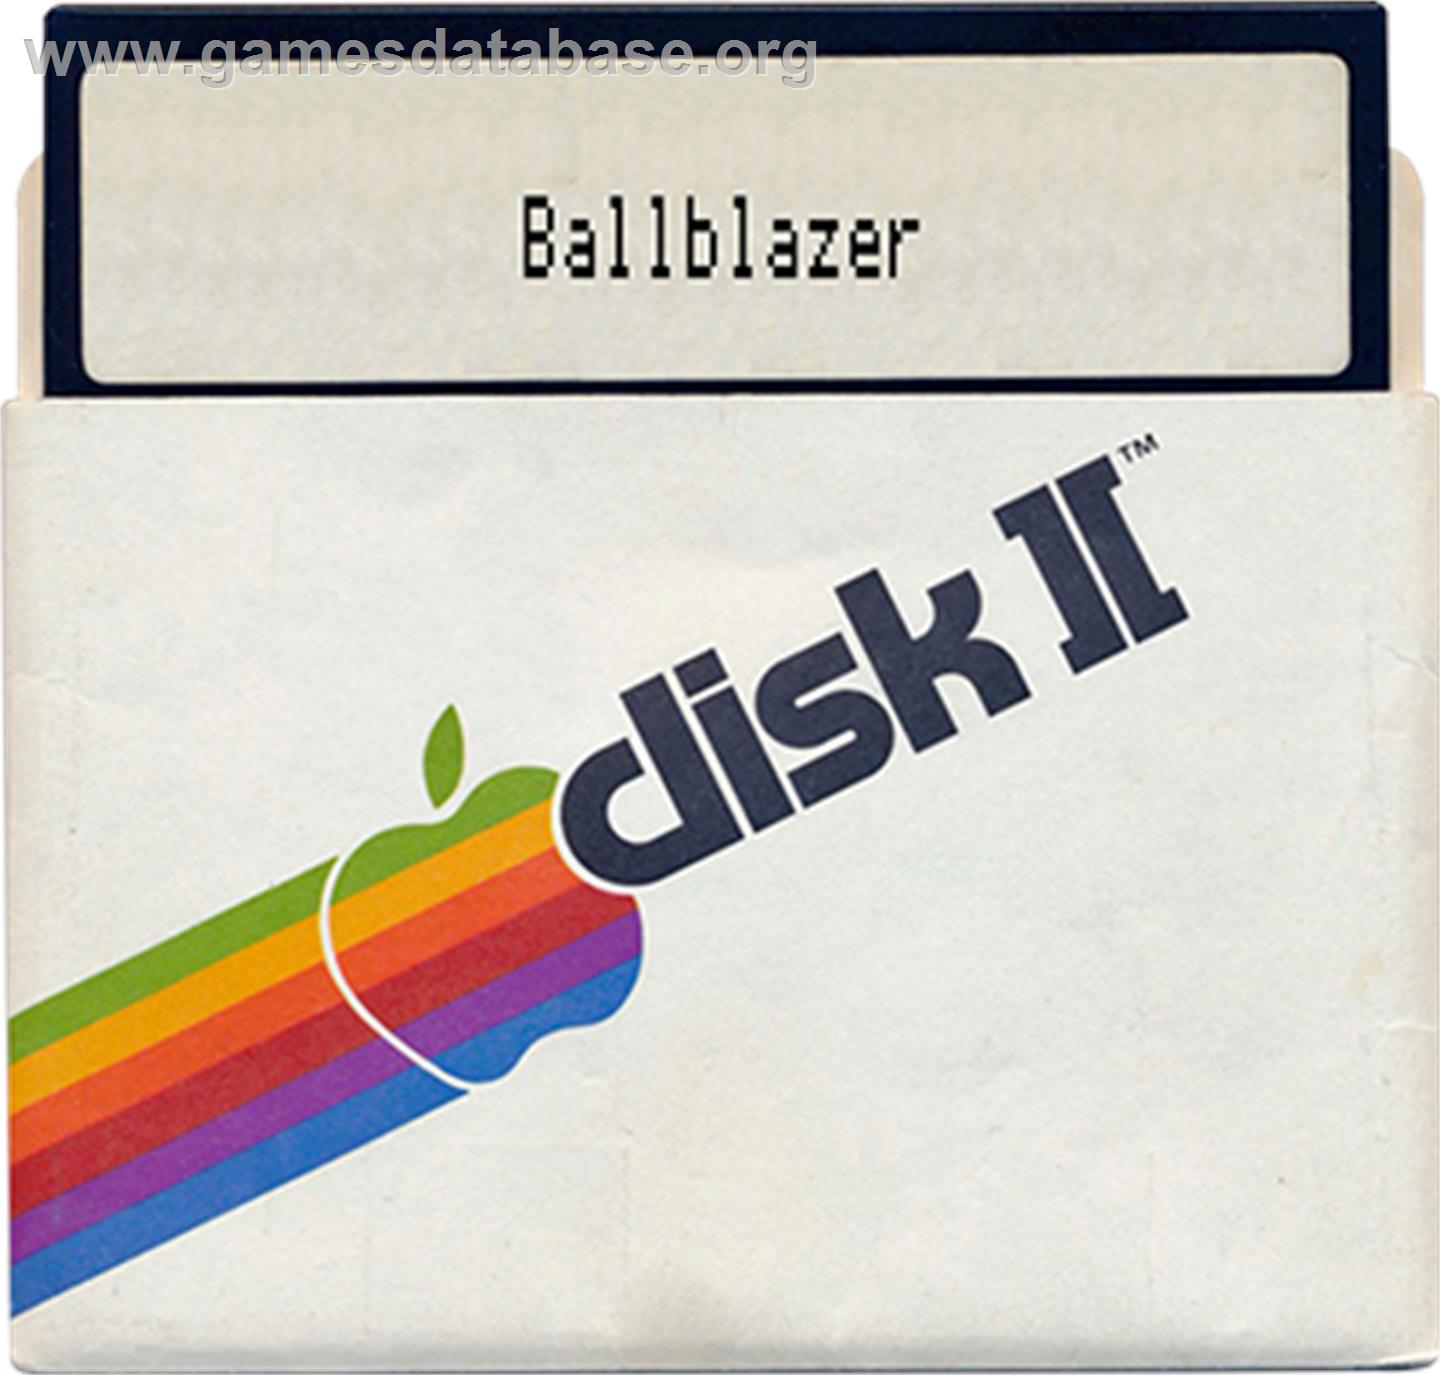 Ballblazer - Apple II - Artwork - Disc